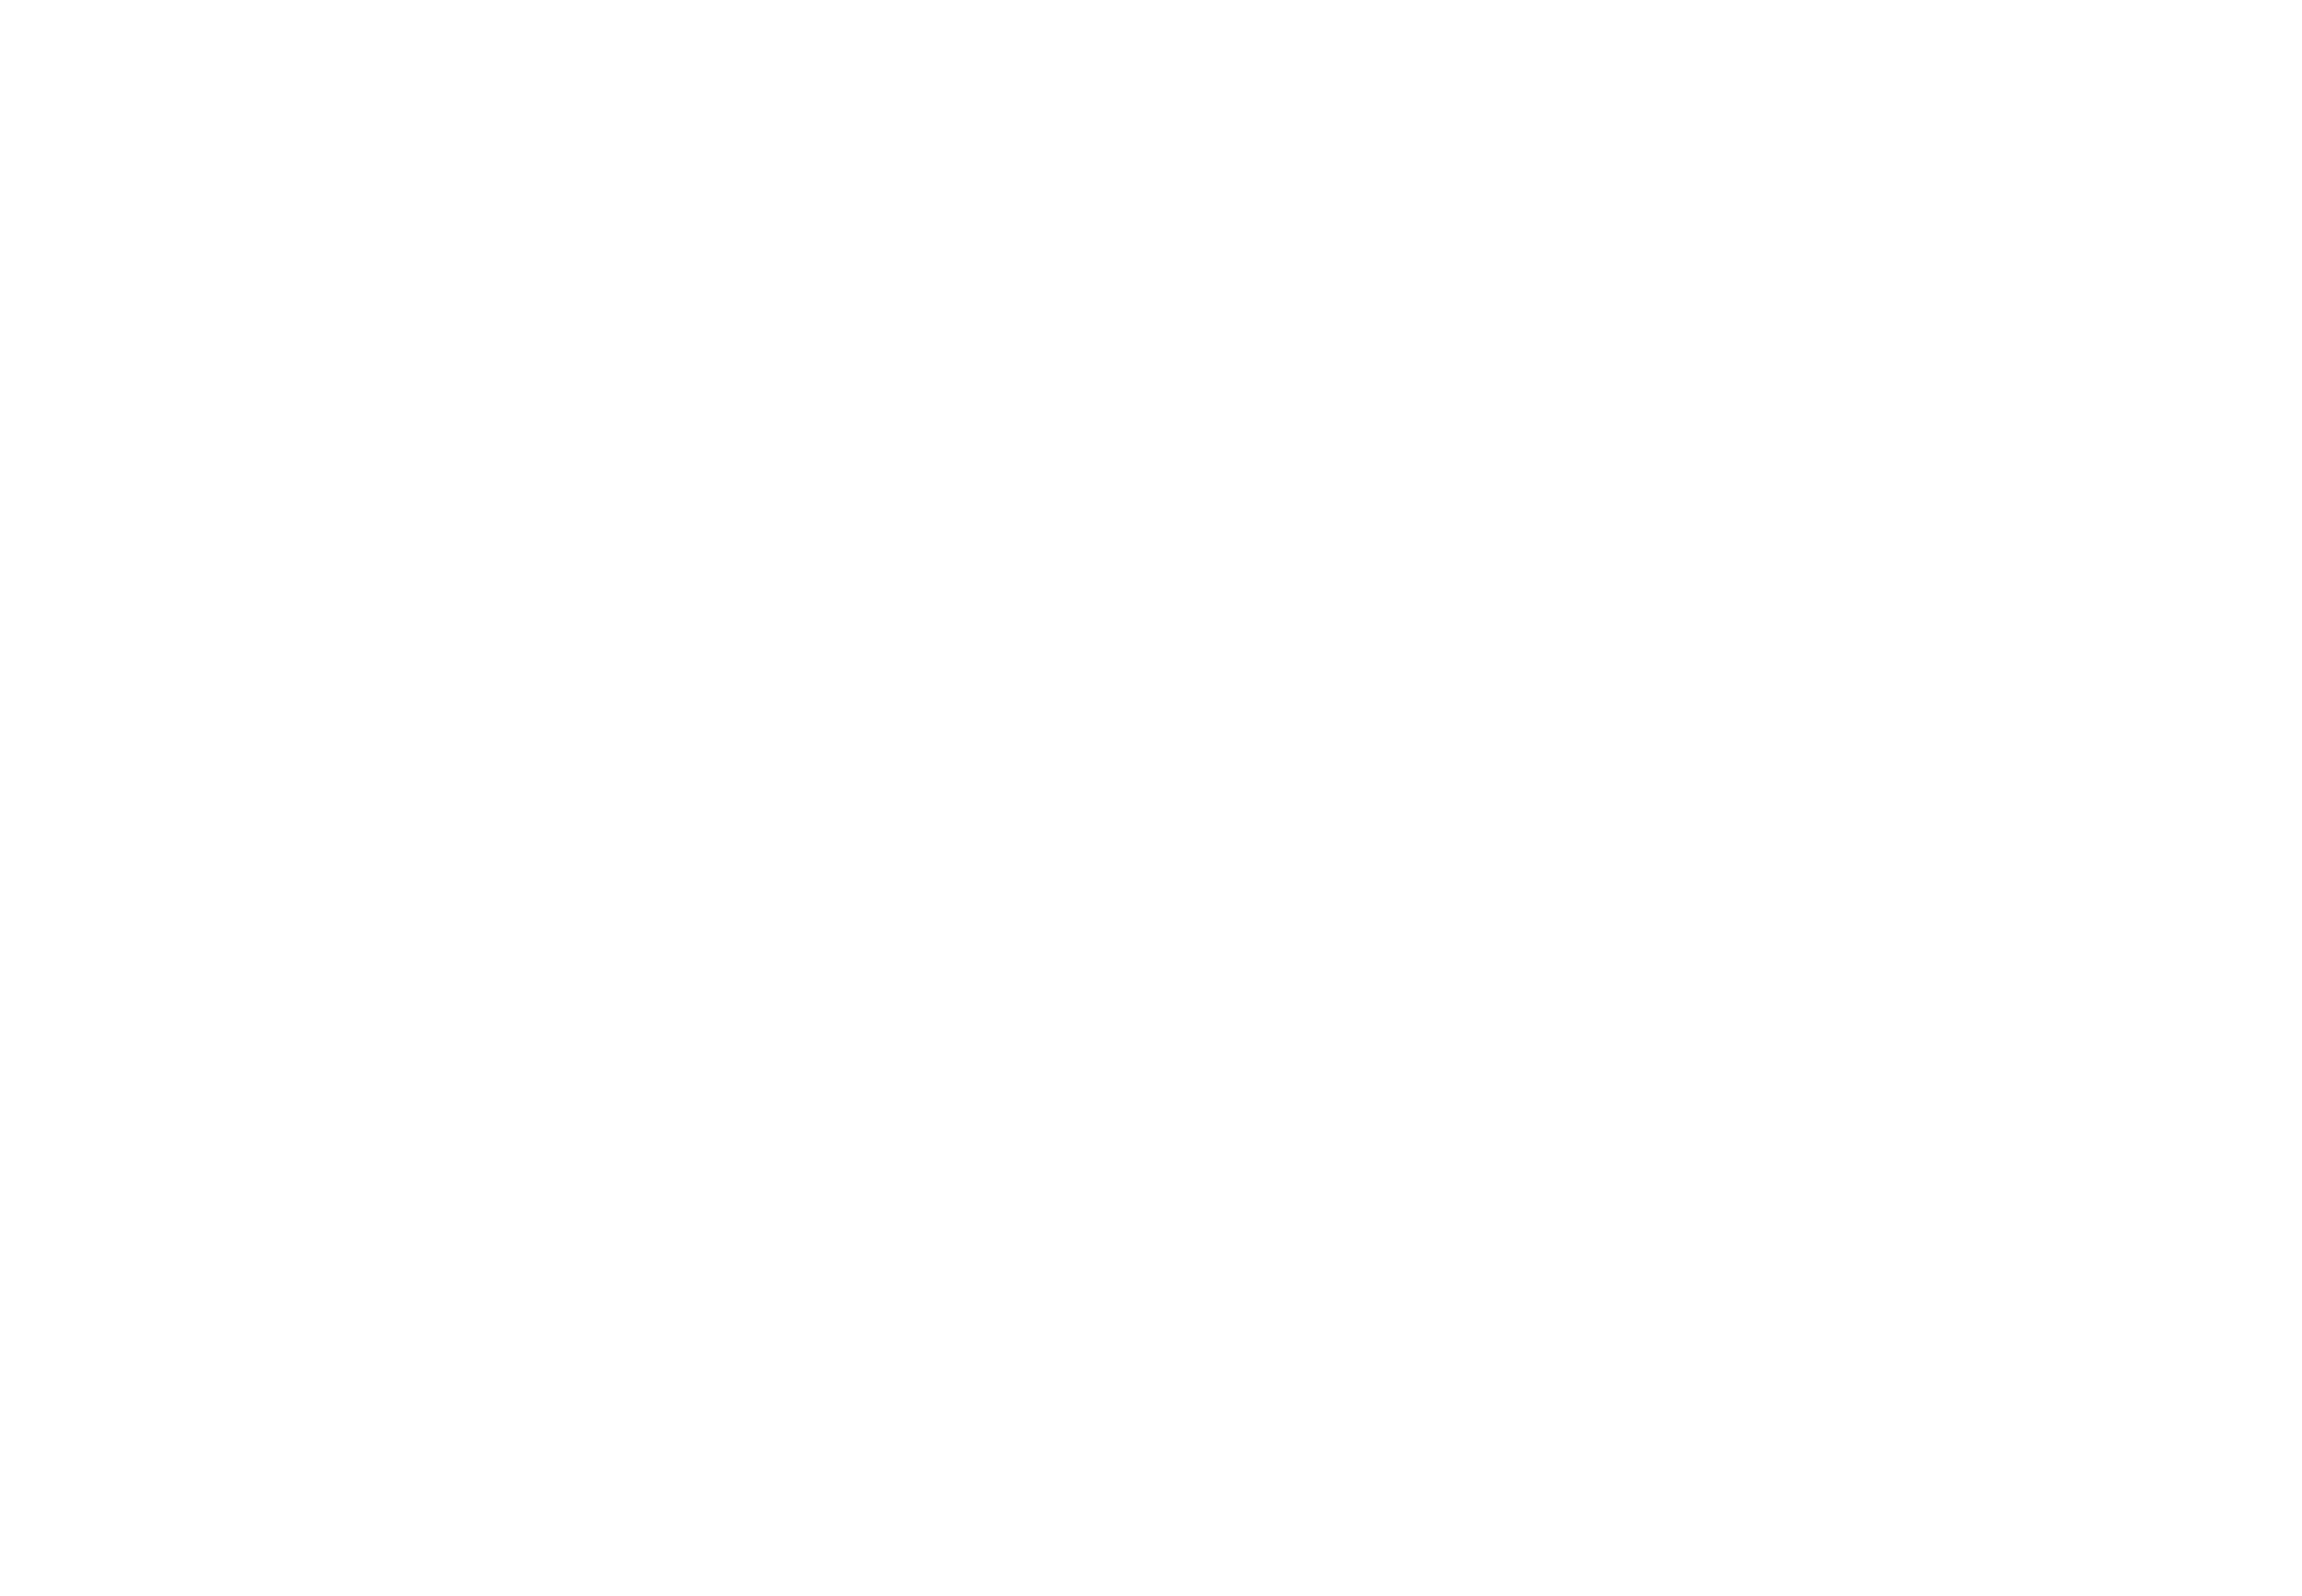 MySQL Logo - MySql Logo PNG Transparent & SVG Vector - Freebie Supply